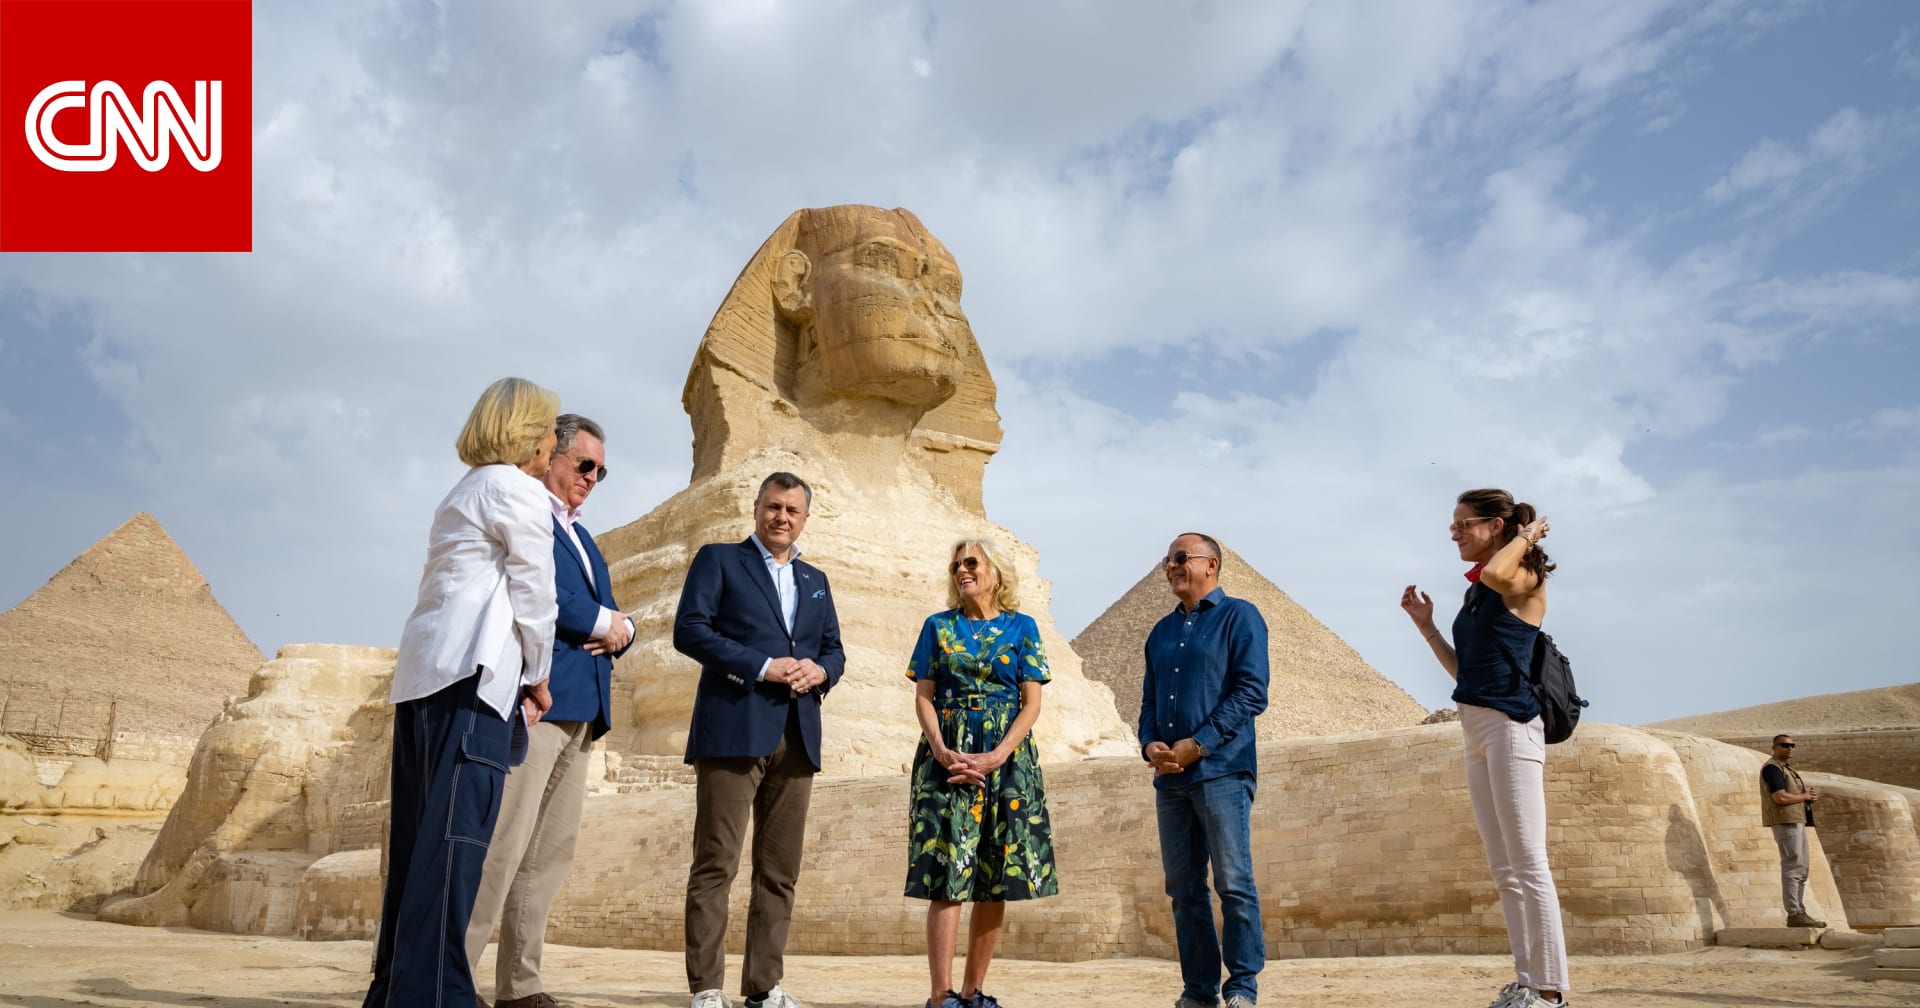 On her 72nd birthday, award-winning Jill Biden visited the Giza Pyramids in Egypt